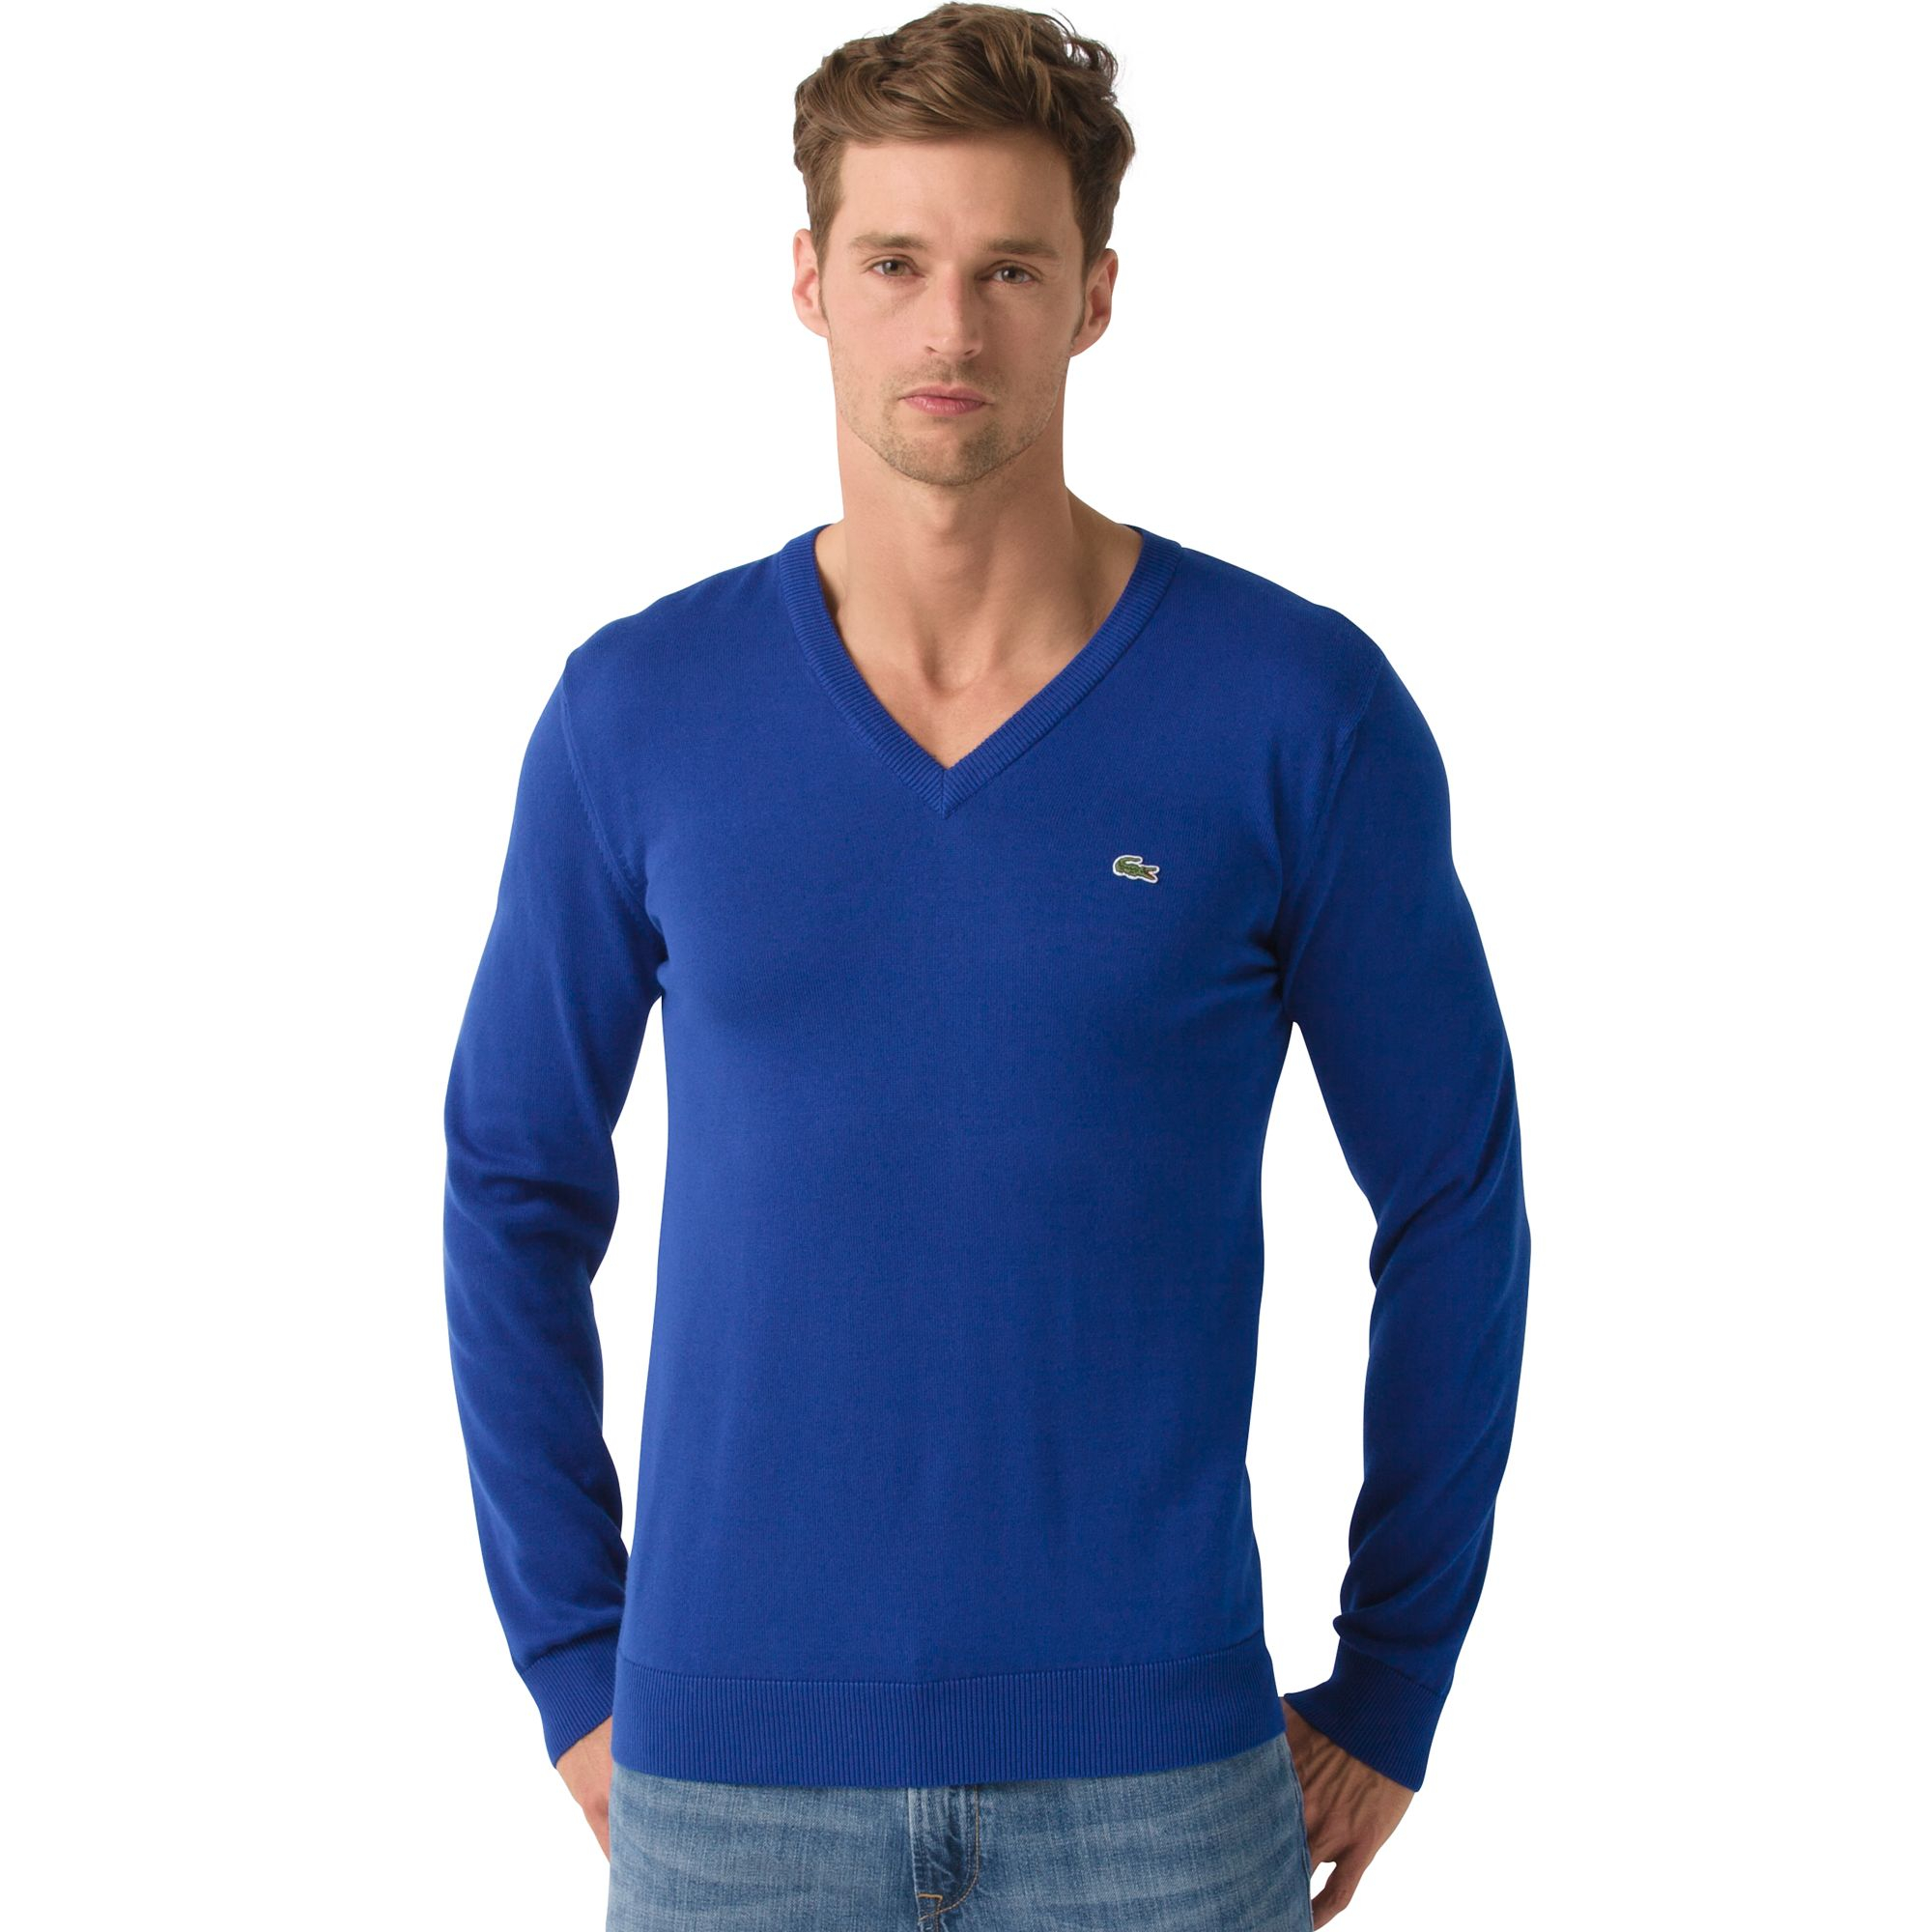 lacoste sweater blue